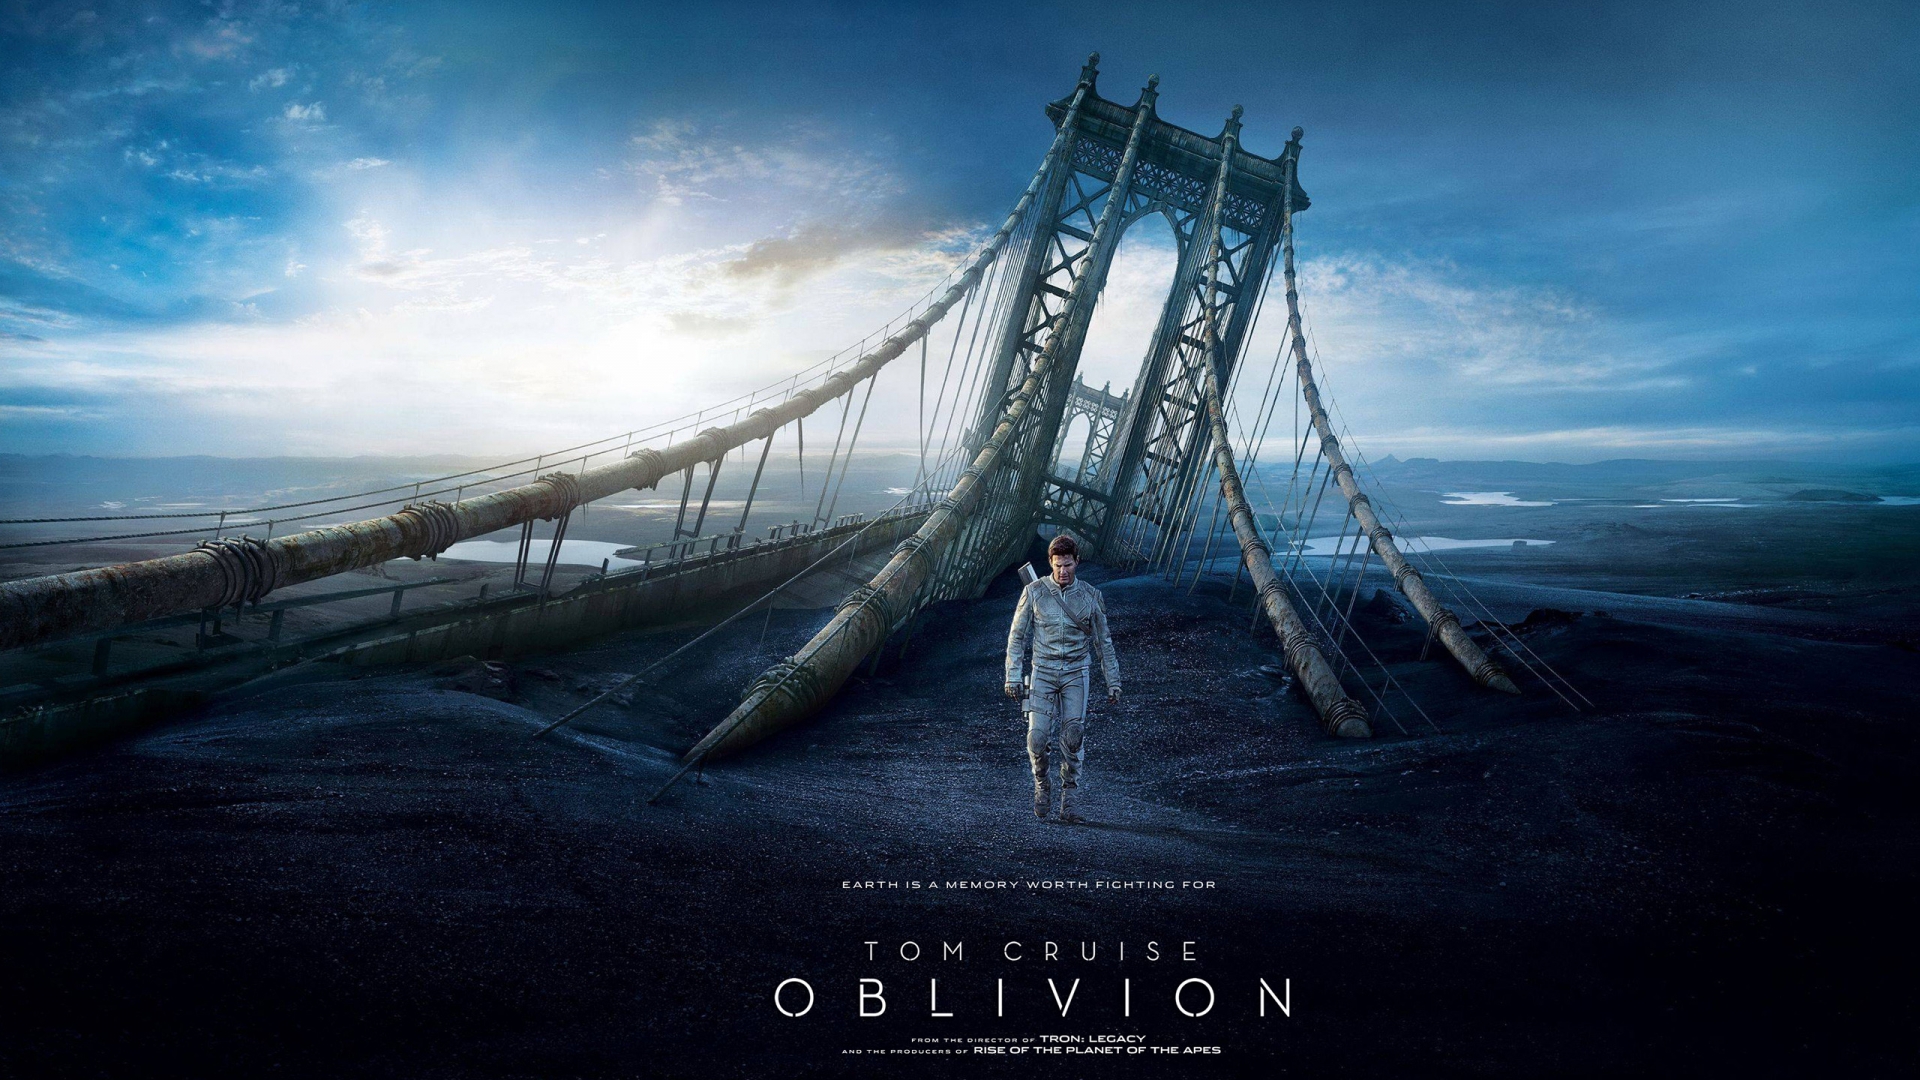 Oblivion Tom Cruise for 1920 x 1080 HDTV 1080p resolution